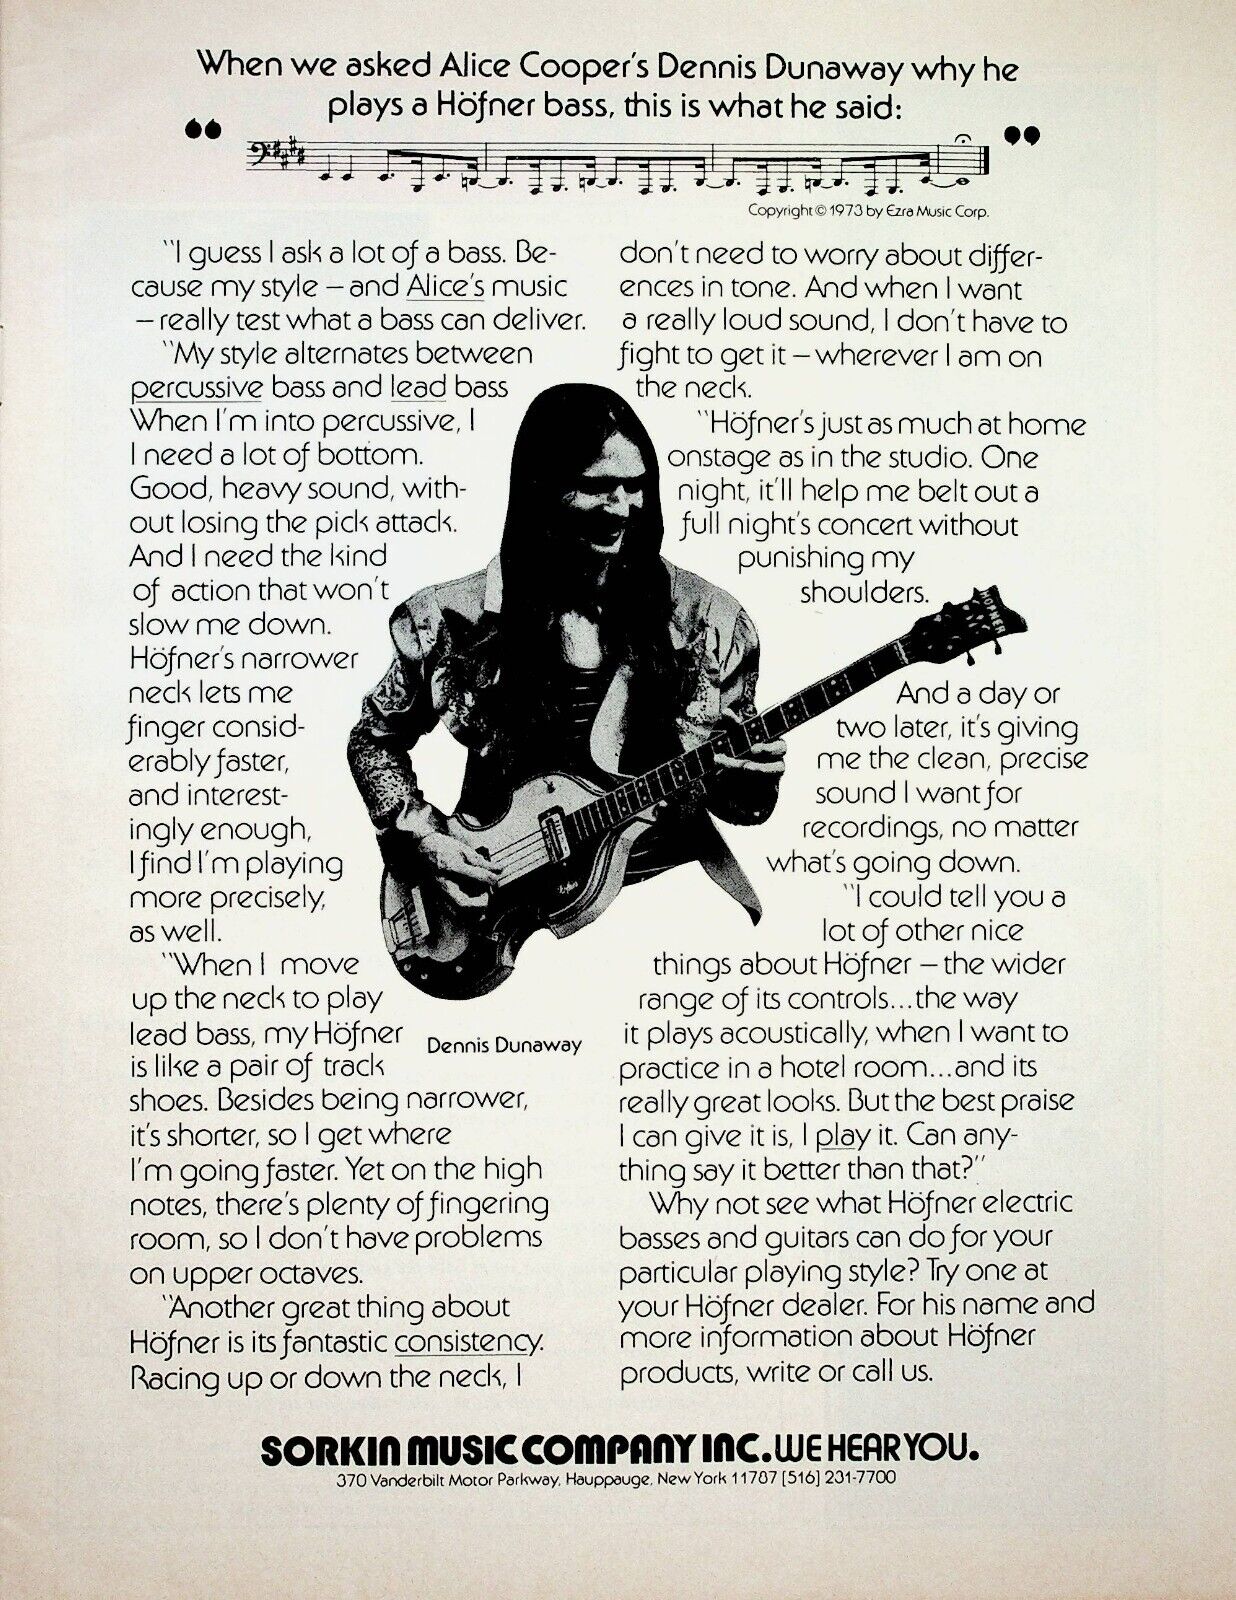 1974 Dennis Dunaway Alice Cooper  Hofner Bass Guitar - Vintage Advertisement